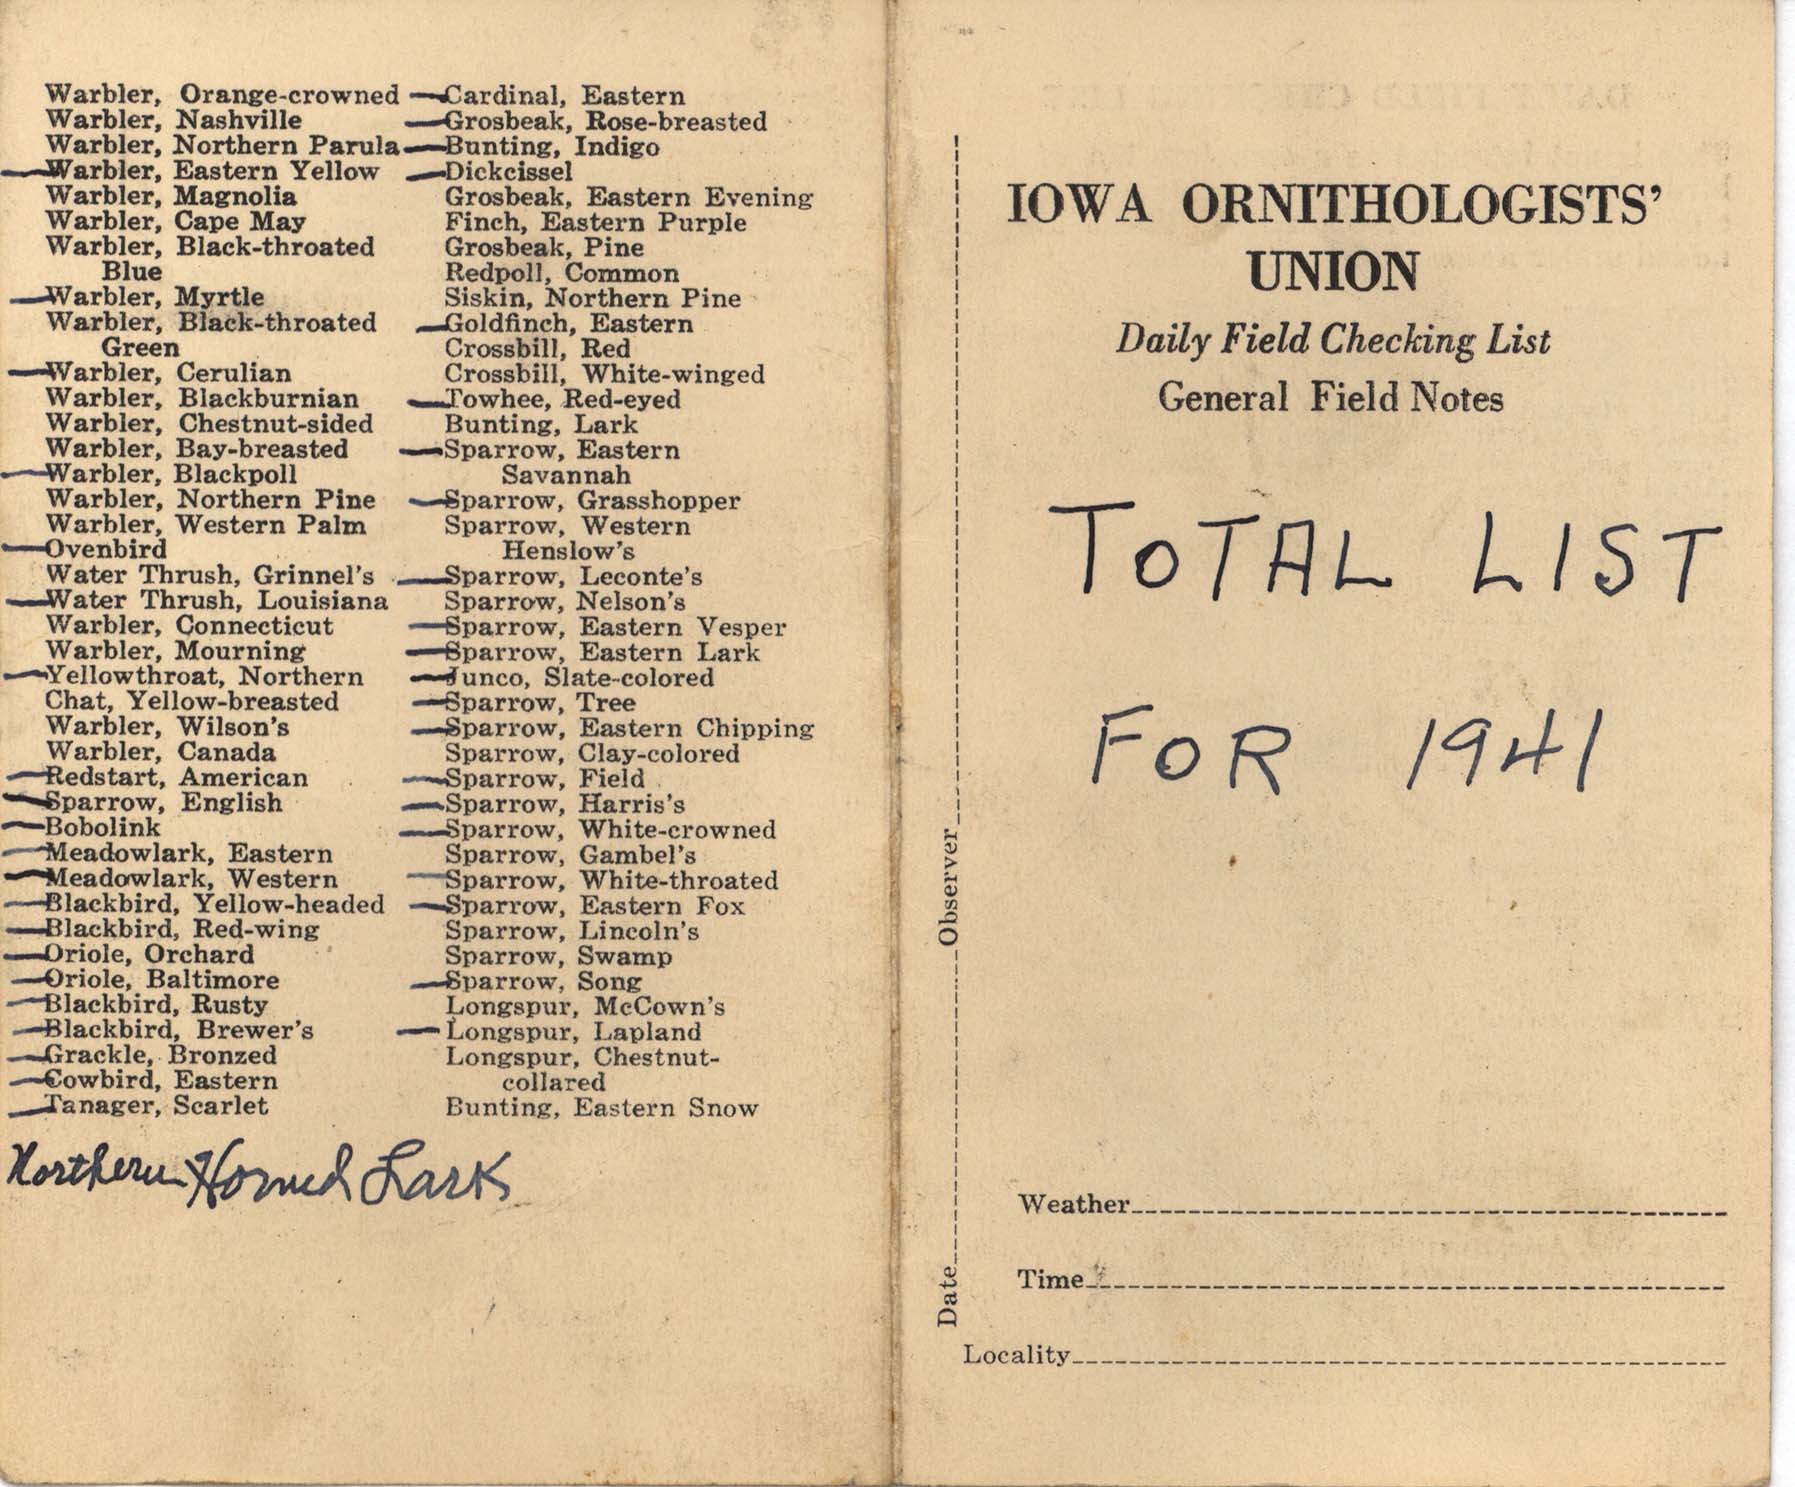 Daily field checking list by Walter Rosene, 1941